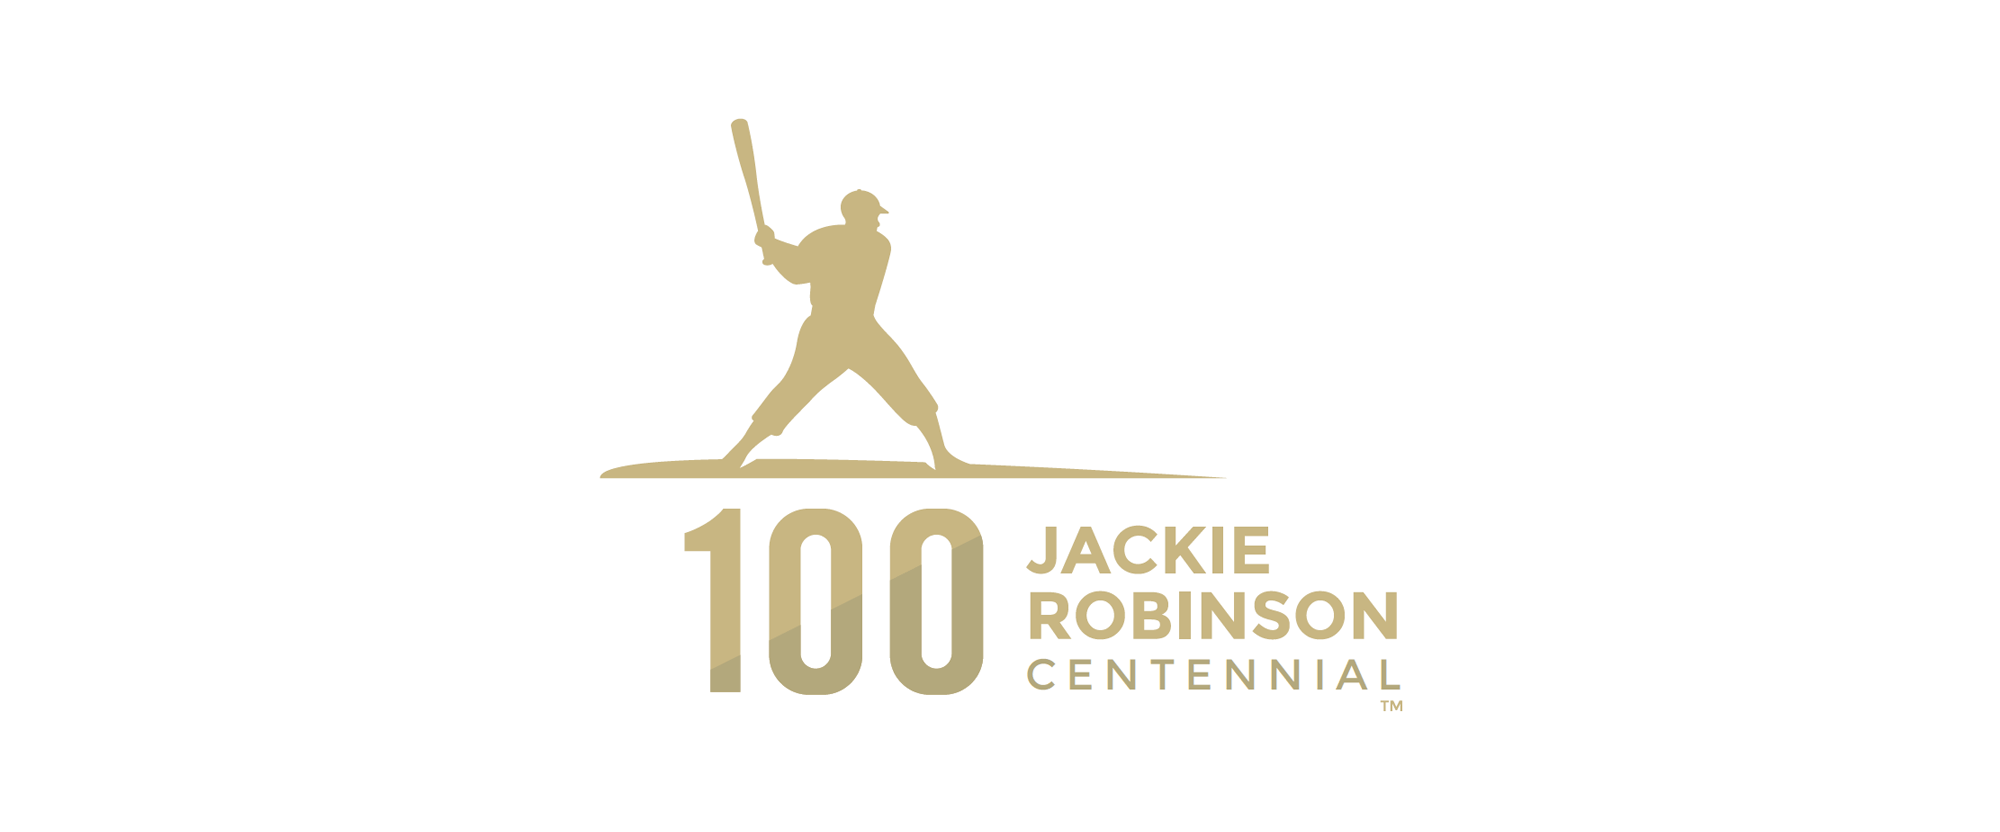 Jackie Logo - Brand New: New Logo for Jackie Robinson Centennial by Joe Bosack & Co.